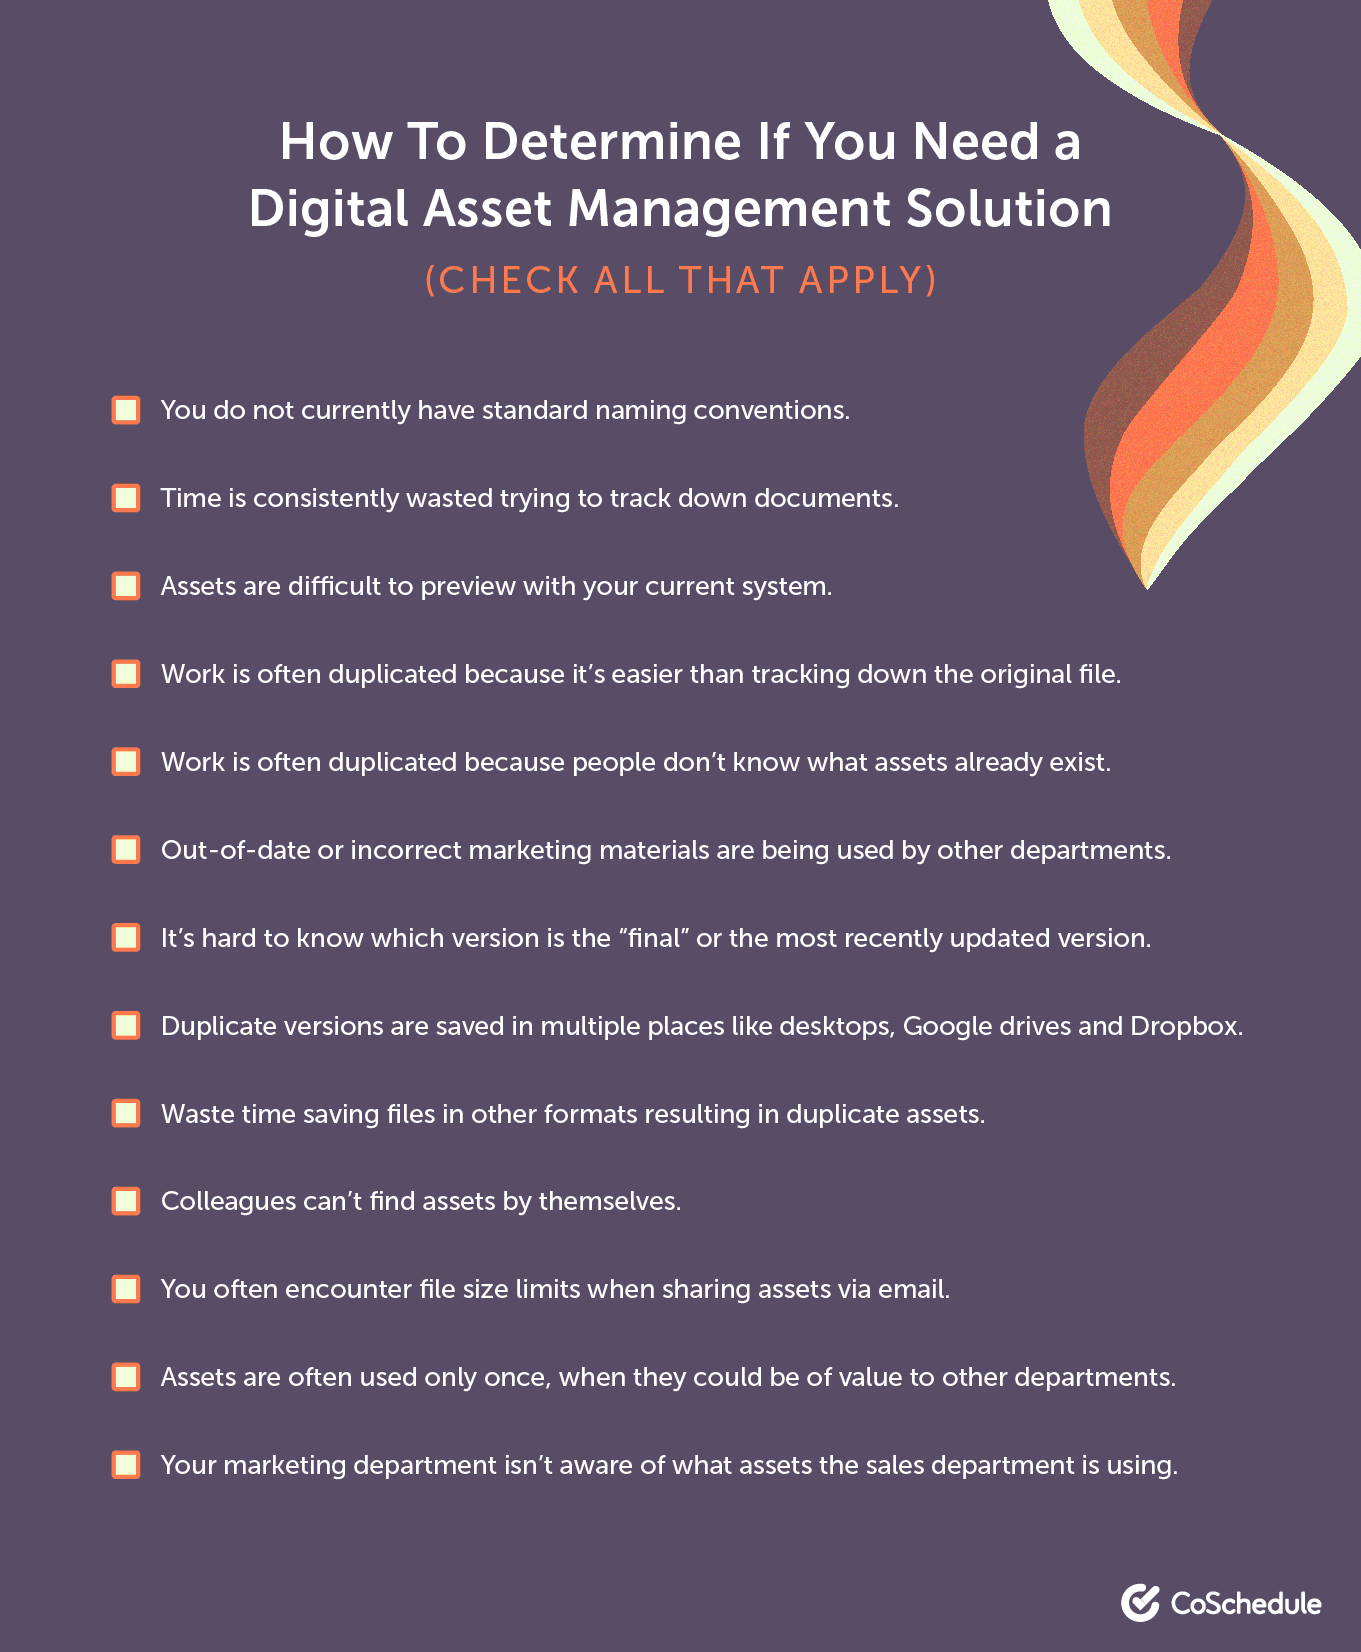 Digital Asset Management solutions